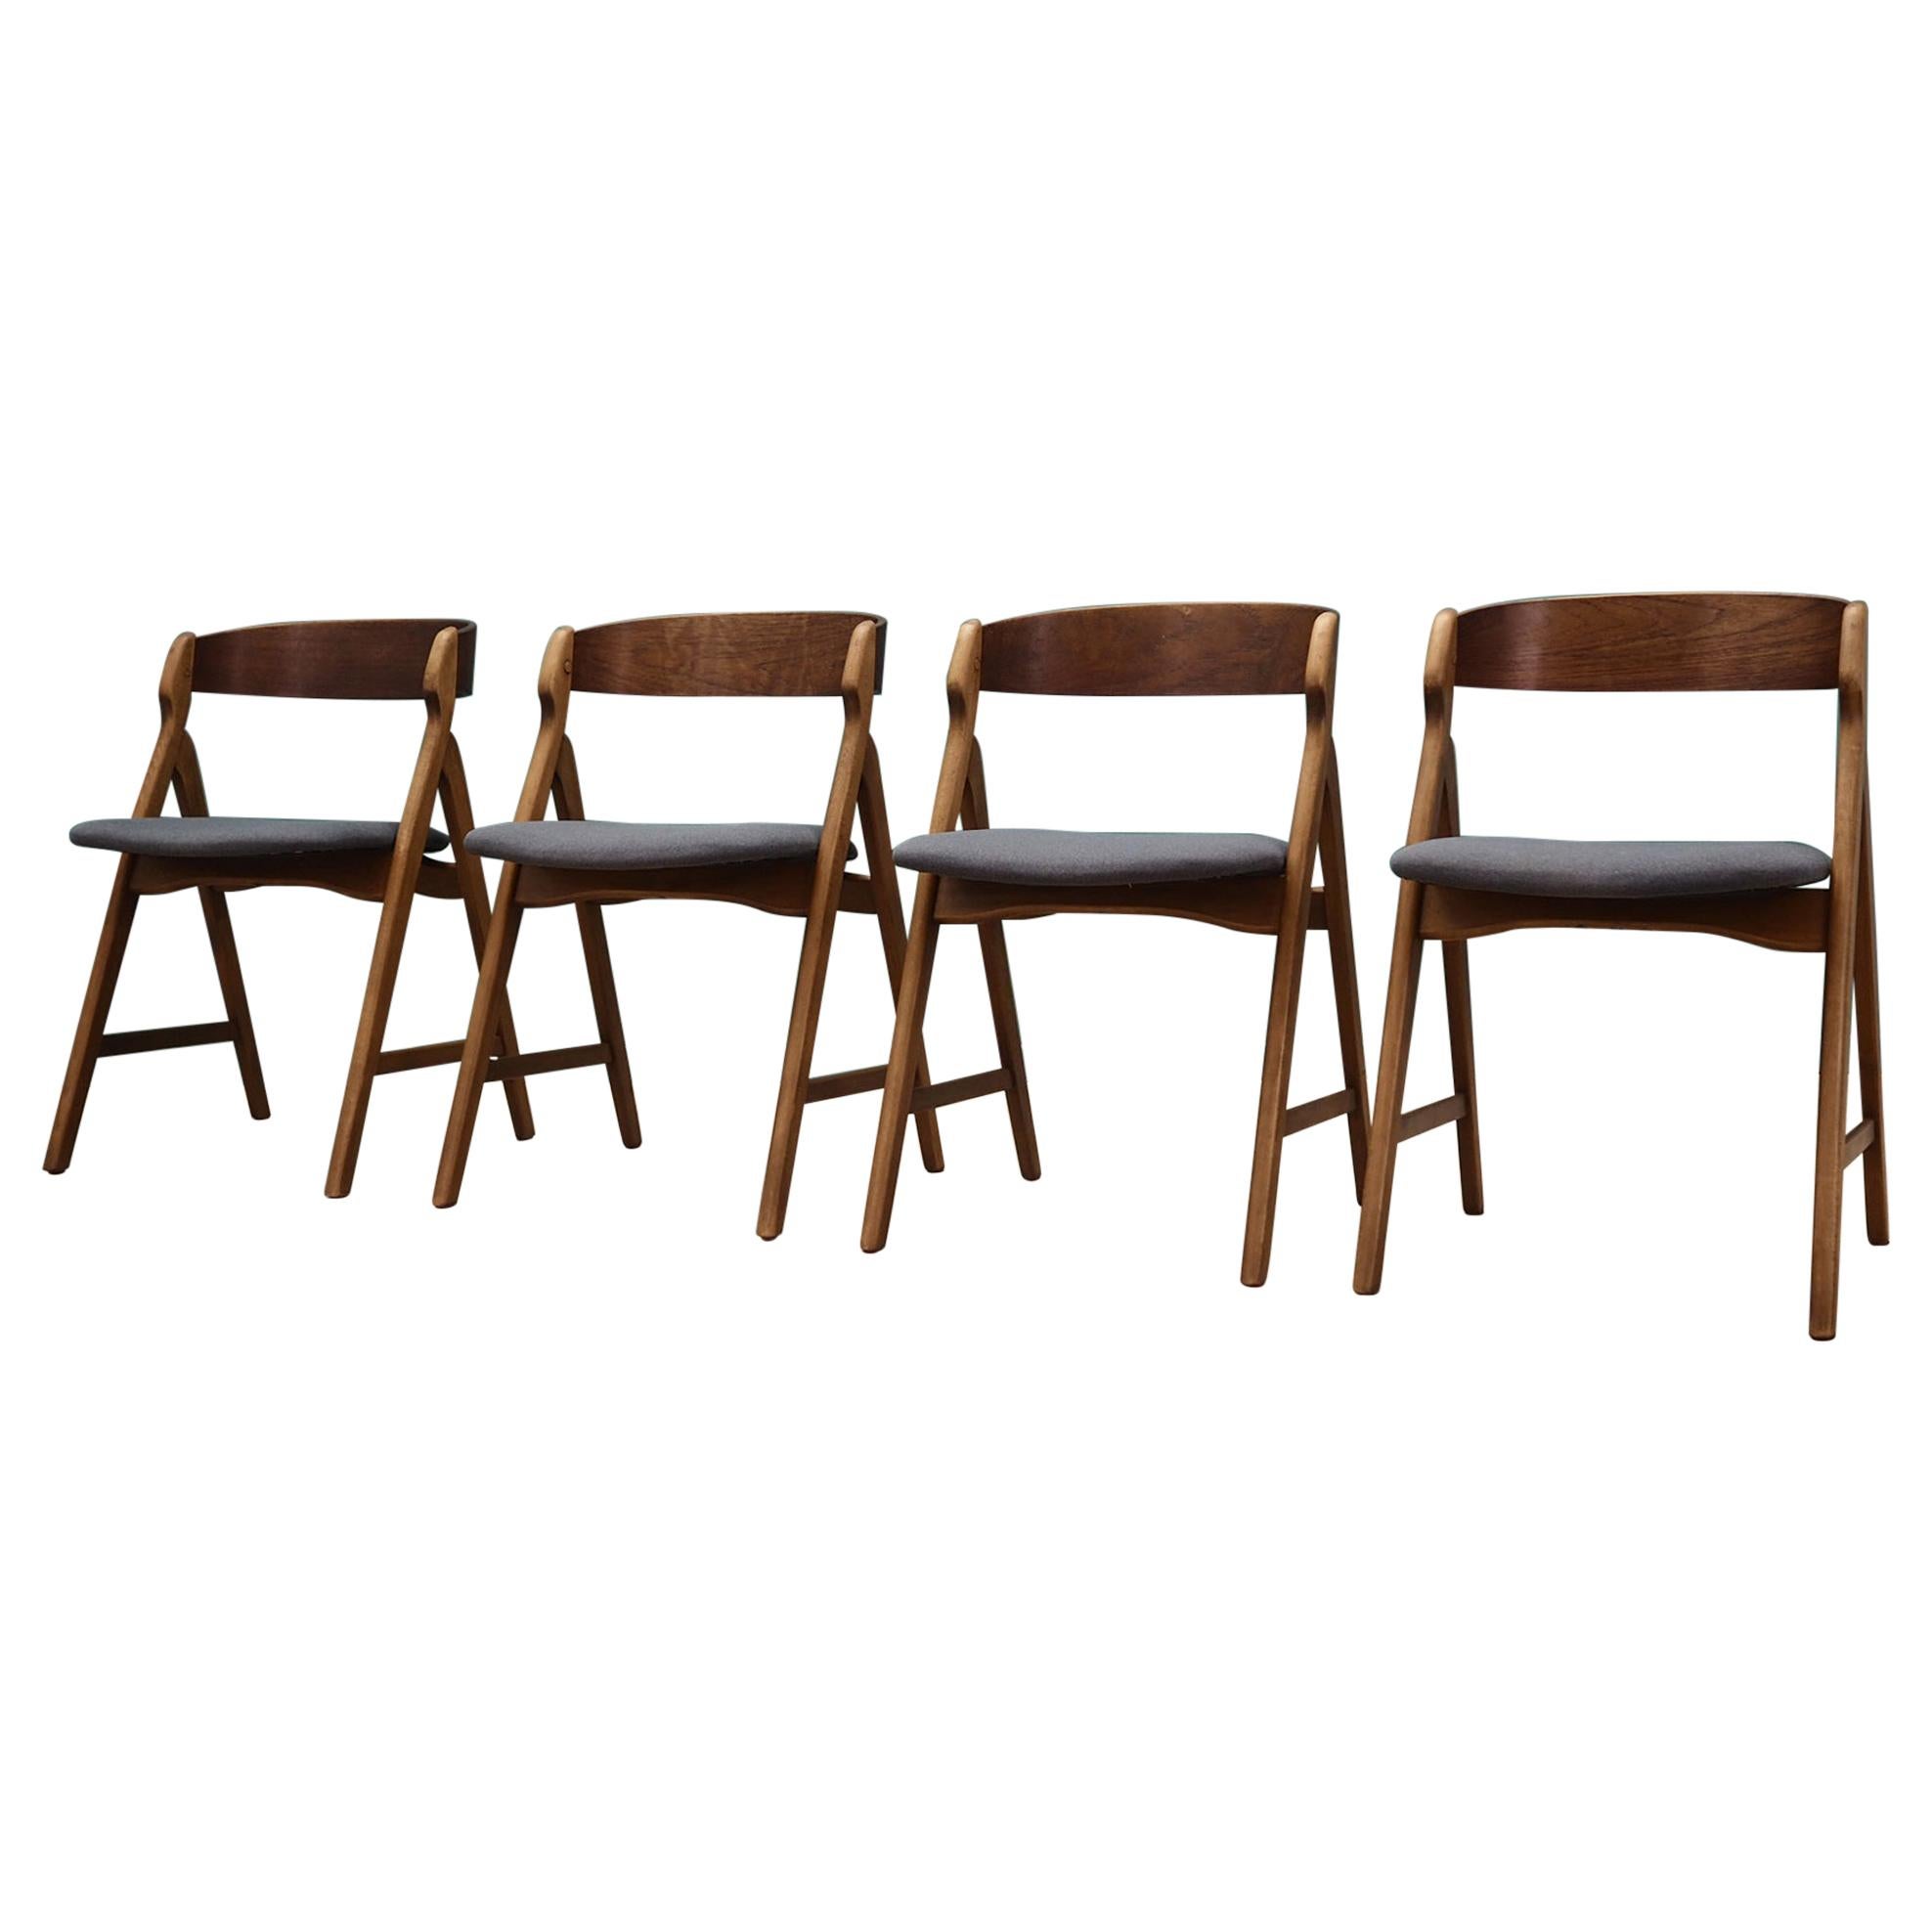 Set of Four Chairs Teak, Danish Design, 1970s